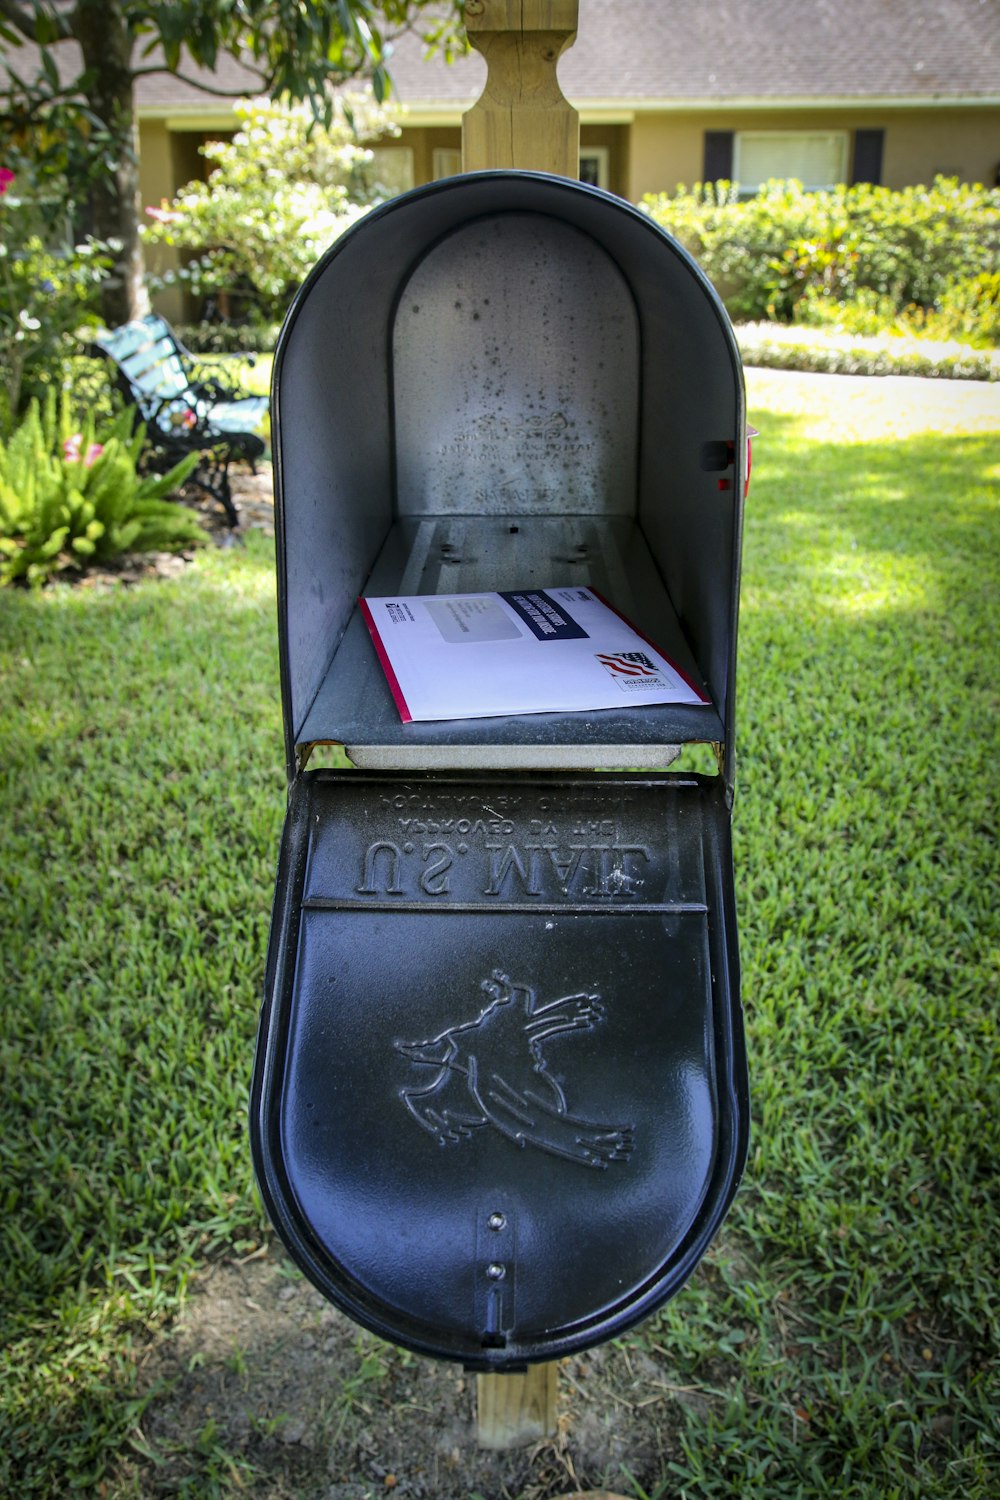 caixa de correio azul e branca no campo de grama verde